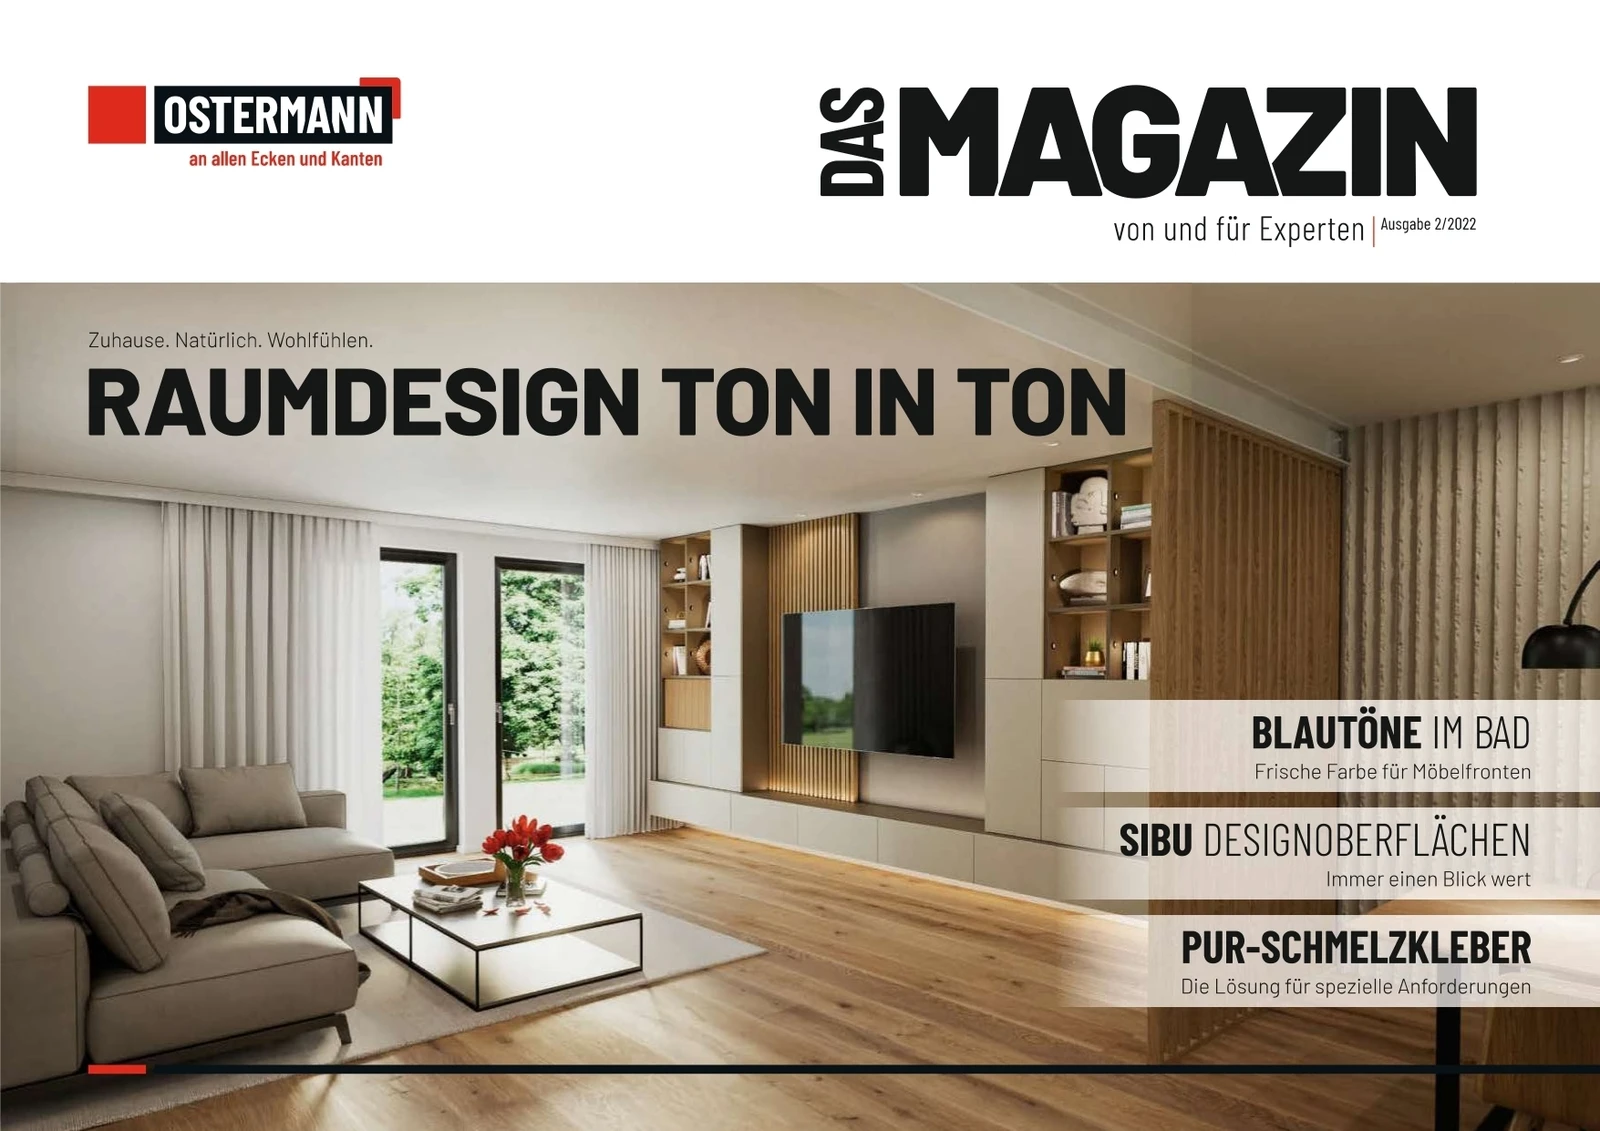 RAUMDESIGN TON IN TON - Das Magazin 2 2022 Ostermann